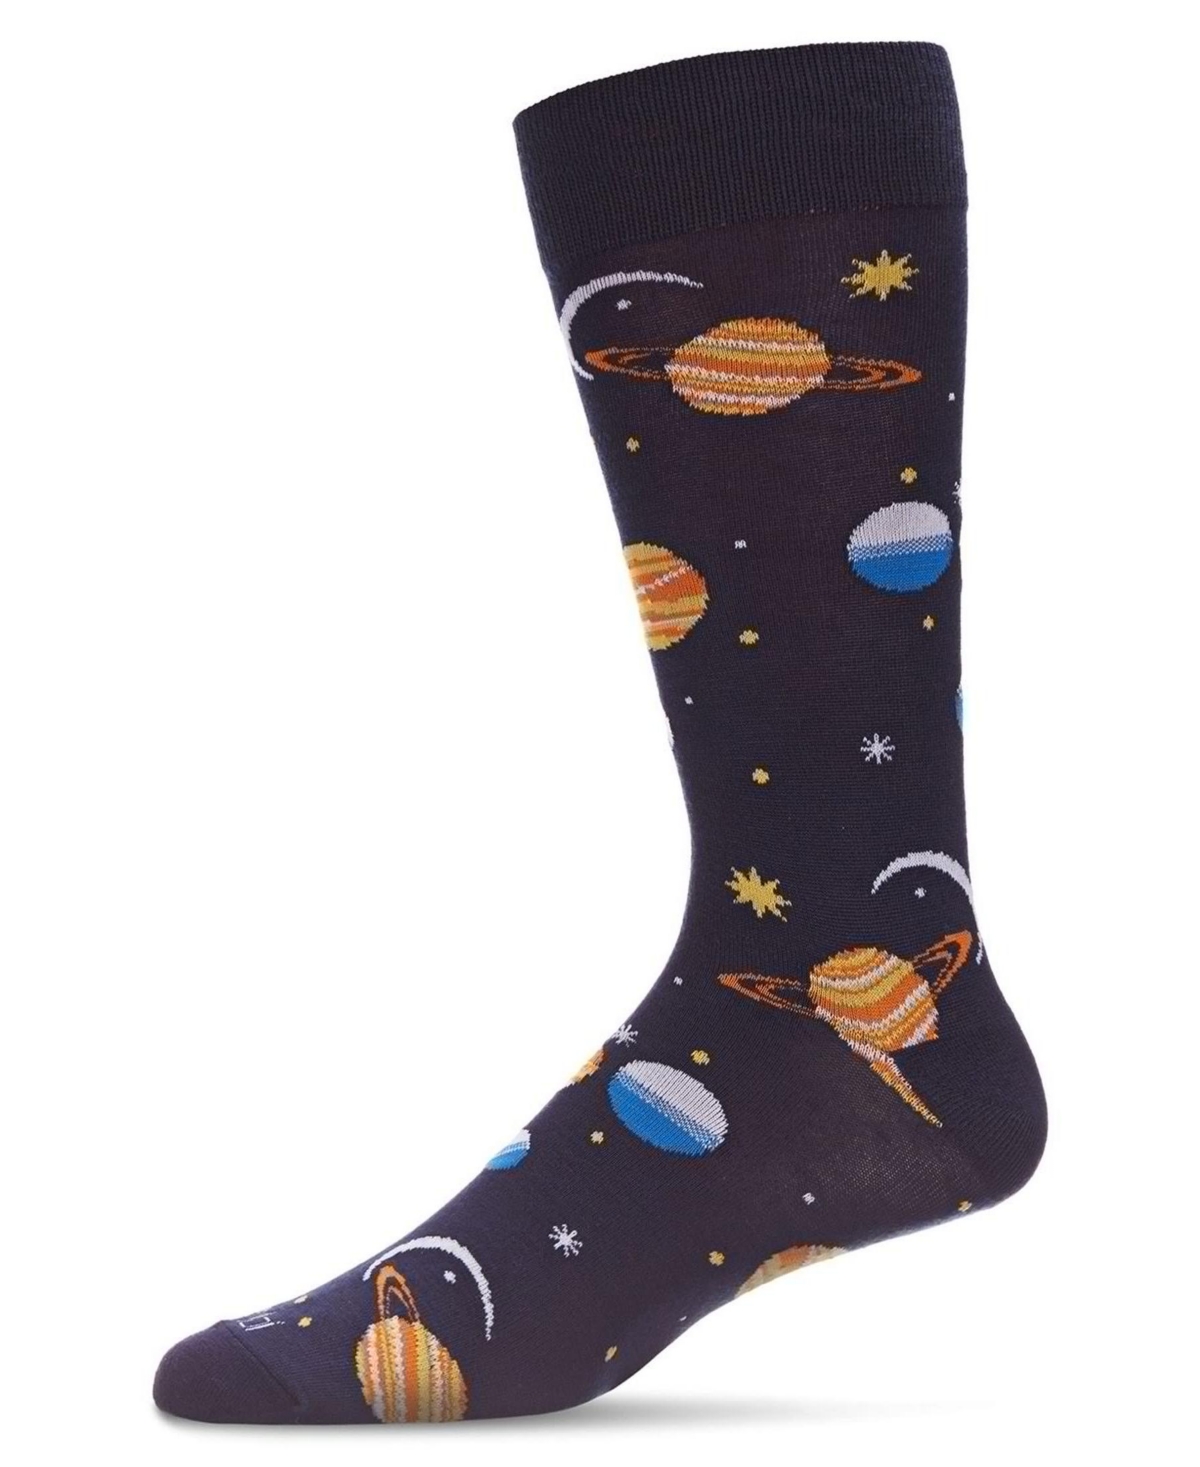 Men's Stellar Outerspace Novelty Crew Socks - Navy